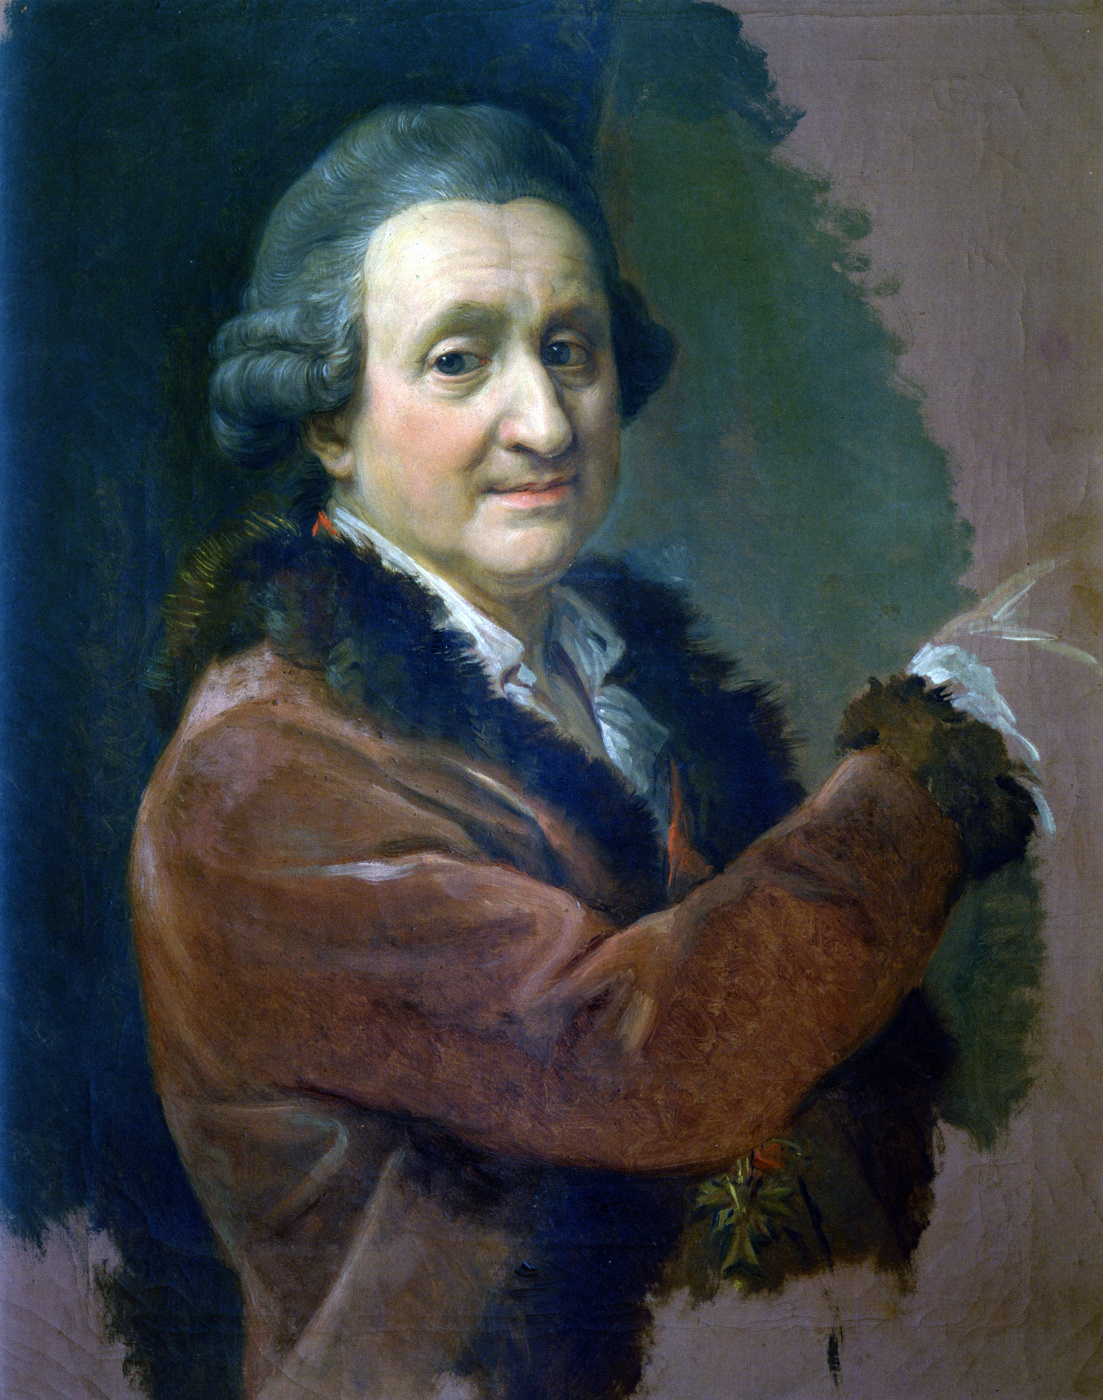 Pompeo Girolamo Batoni. Self-portrait